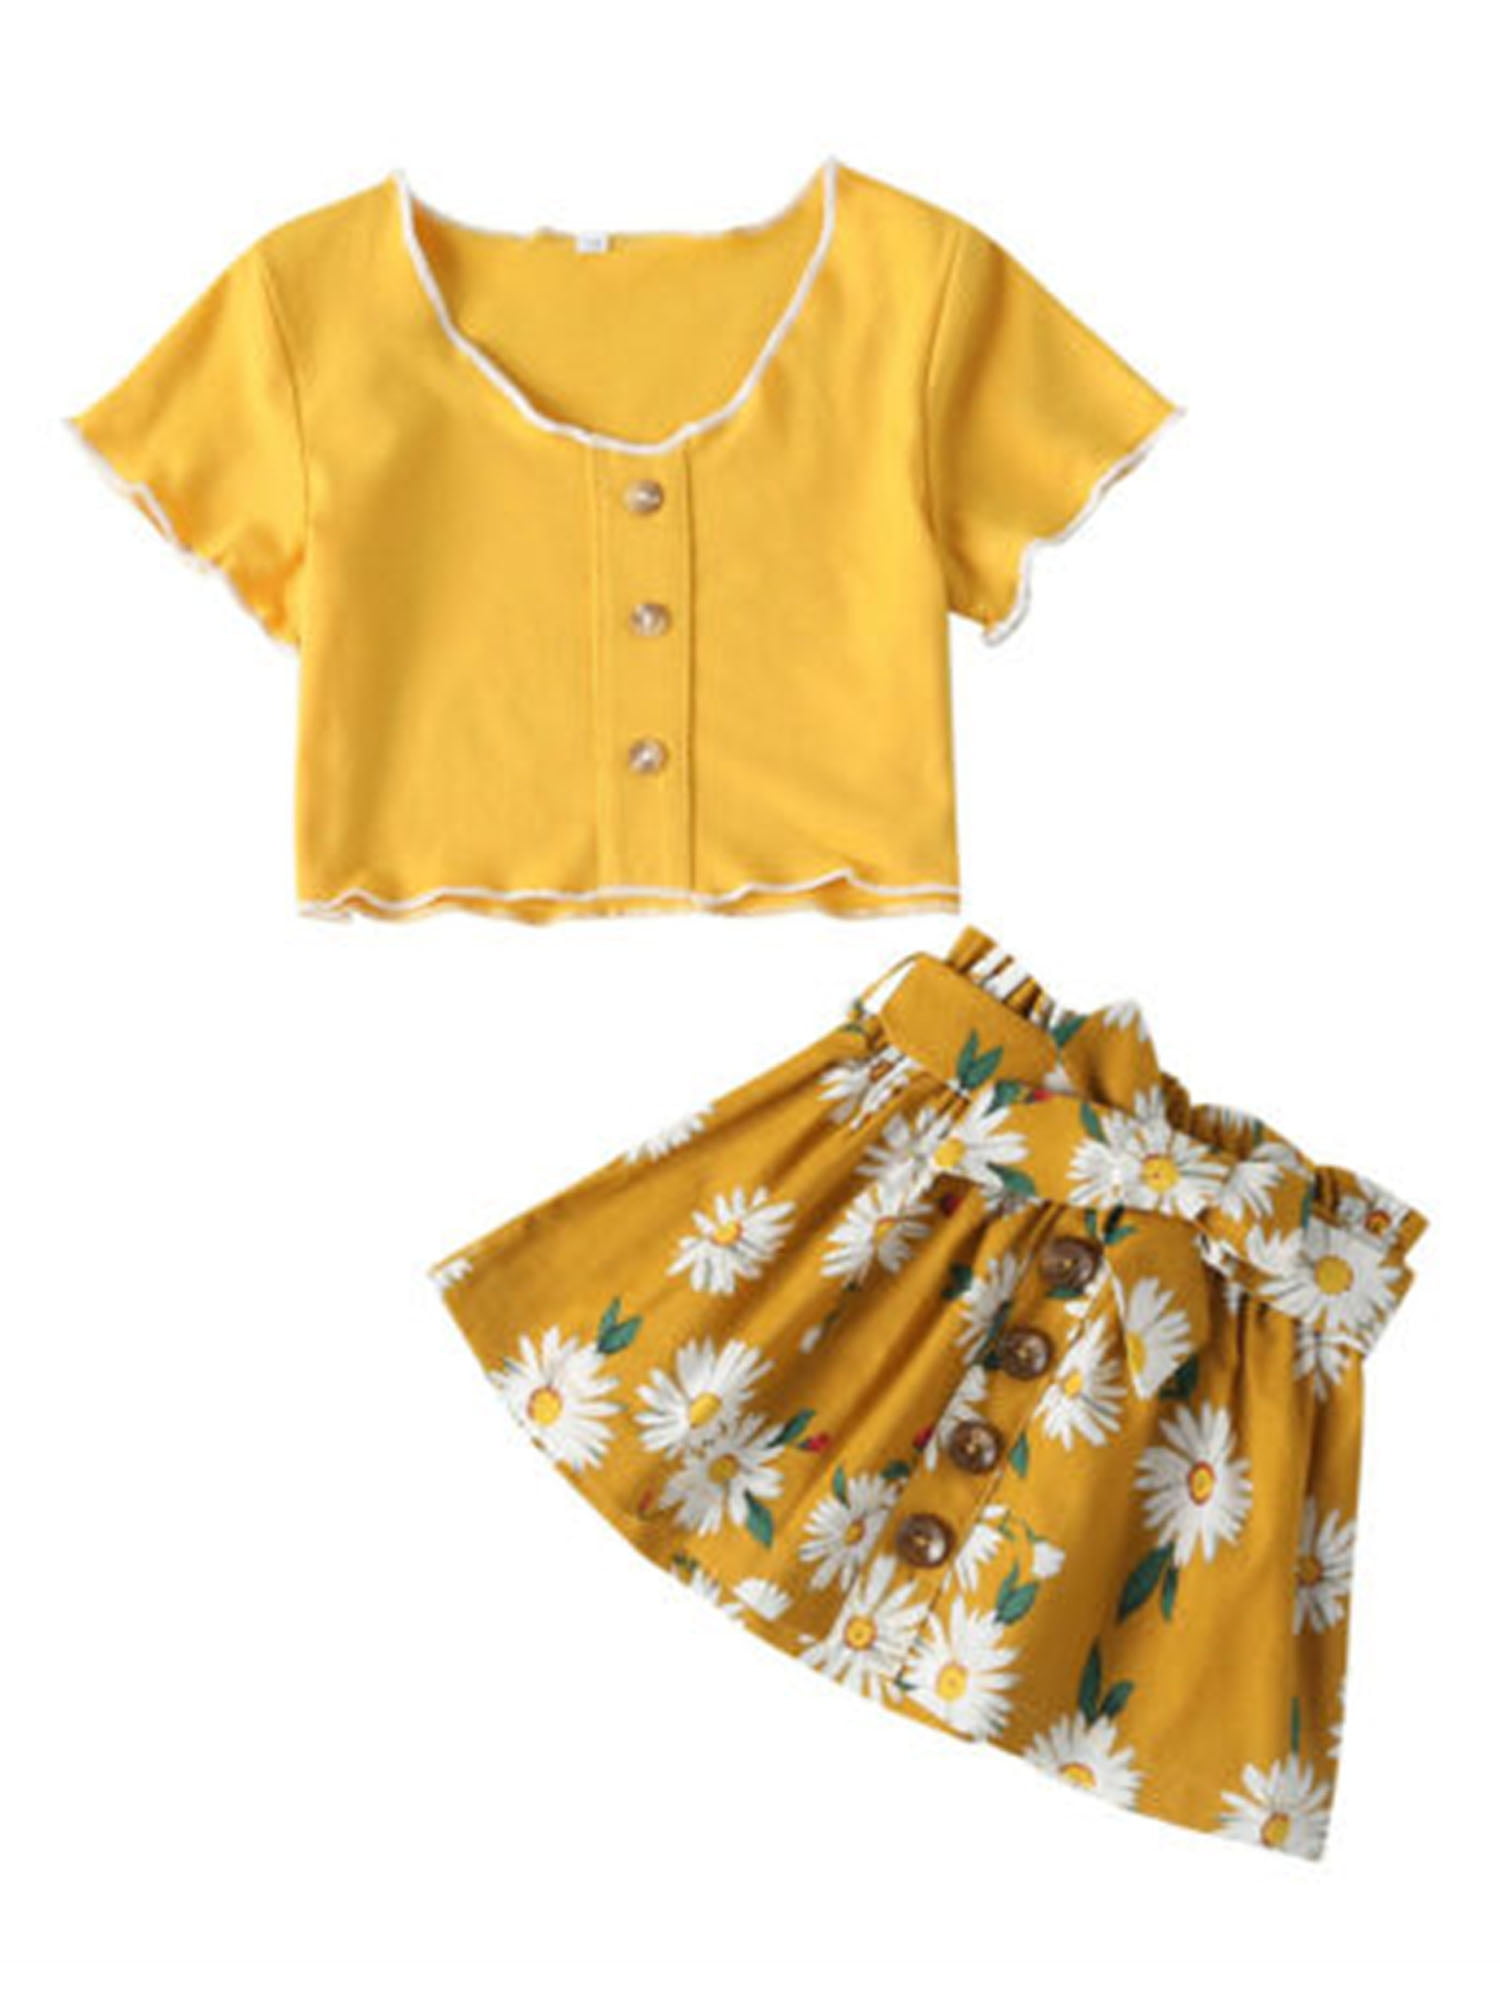 New!2pcs Baby Girls Dress Yellow T-shirt Floral Skirt Set Kids Clothes Outfits 